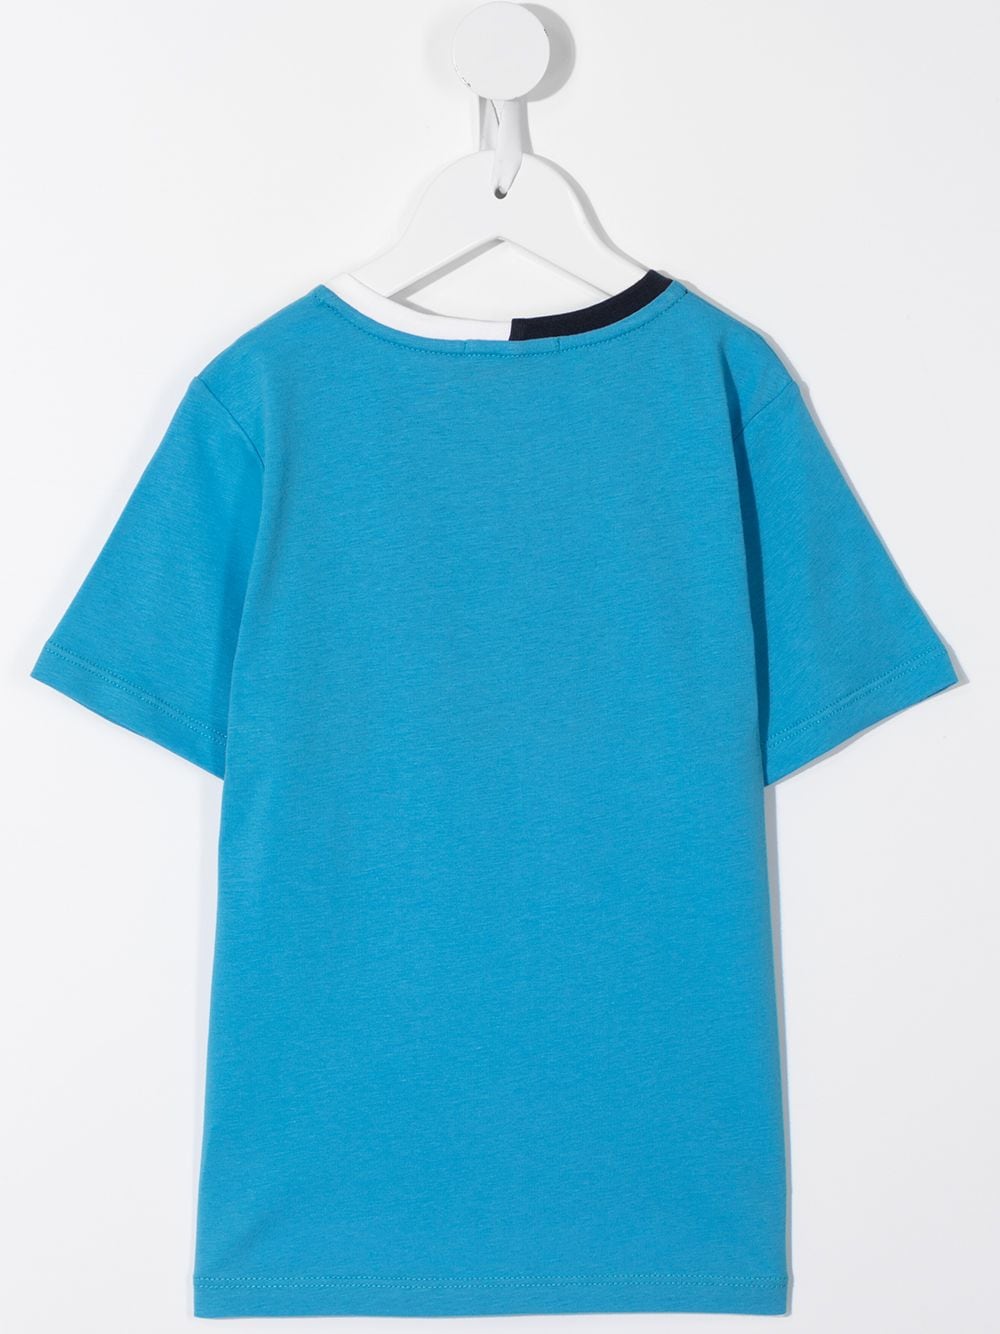 Aigner Kids Tweekleurig T-shirt - Blauw